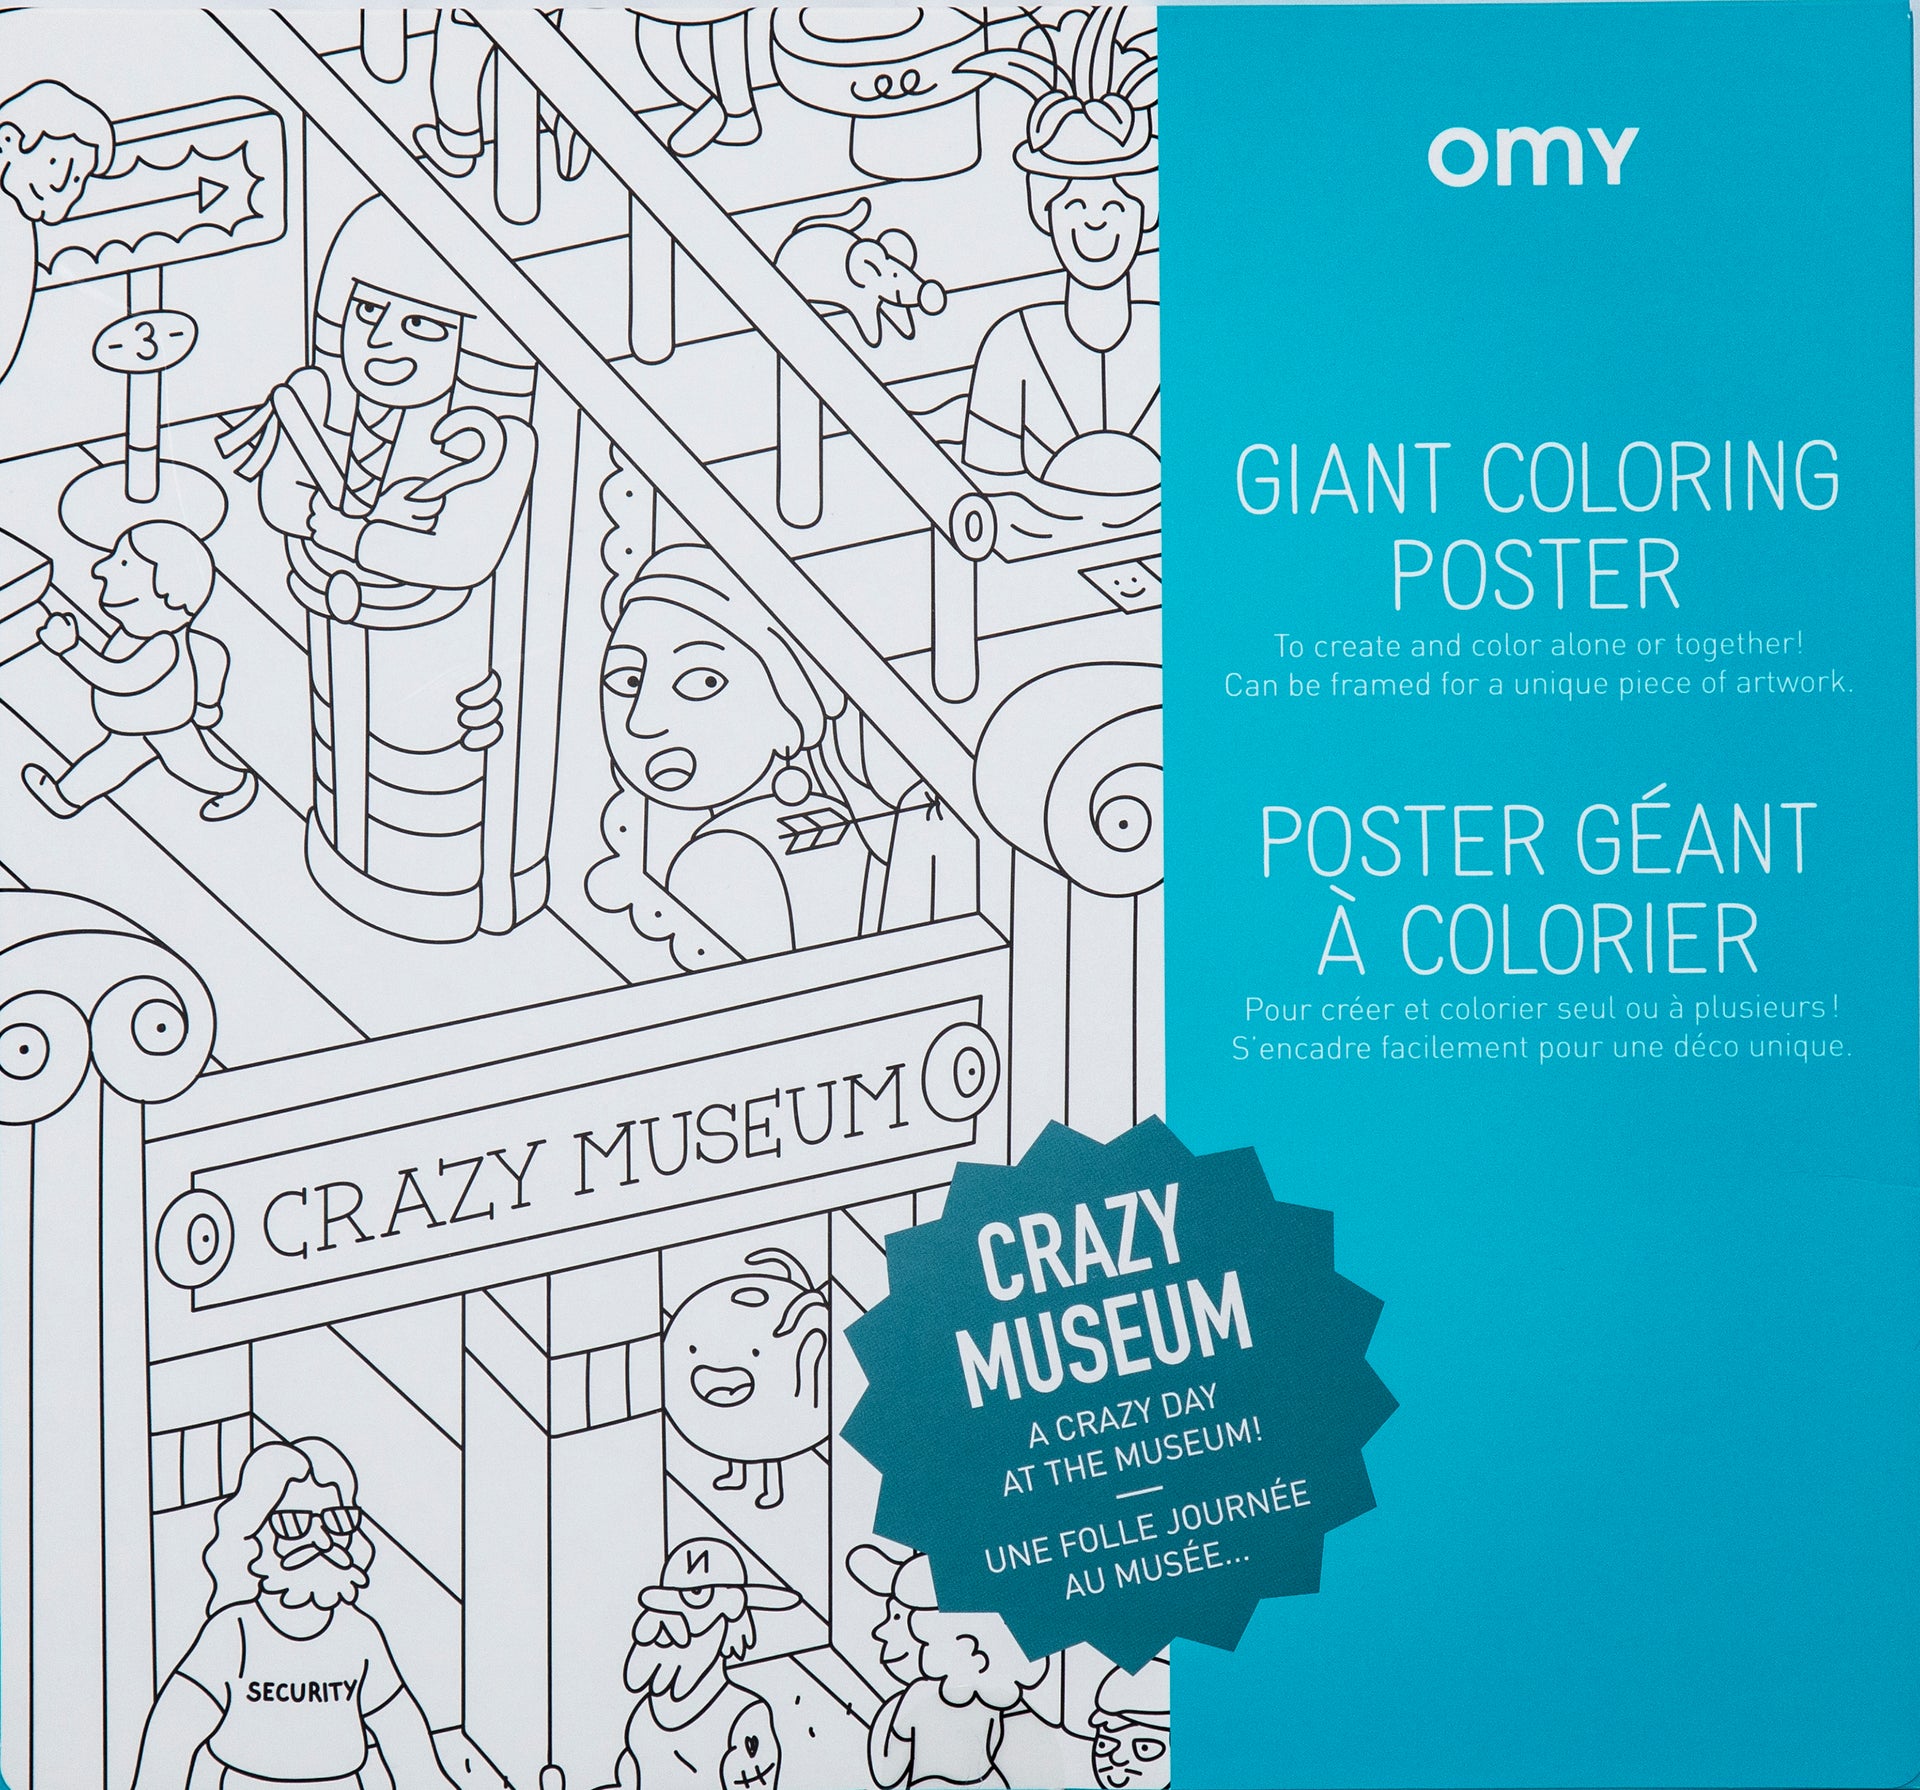 Poster à colorier crazy museum omy